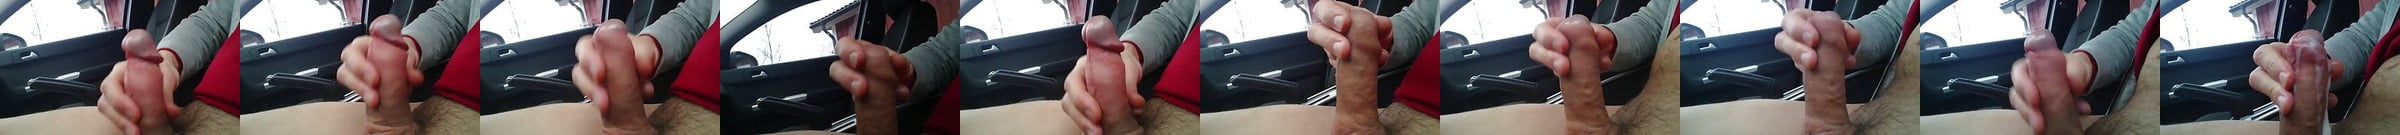 Sex Shop Video Booth Stroke Big Cum Shot Free Gay Porn 66